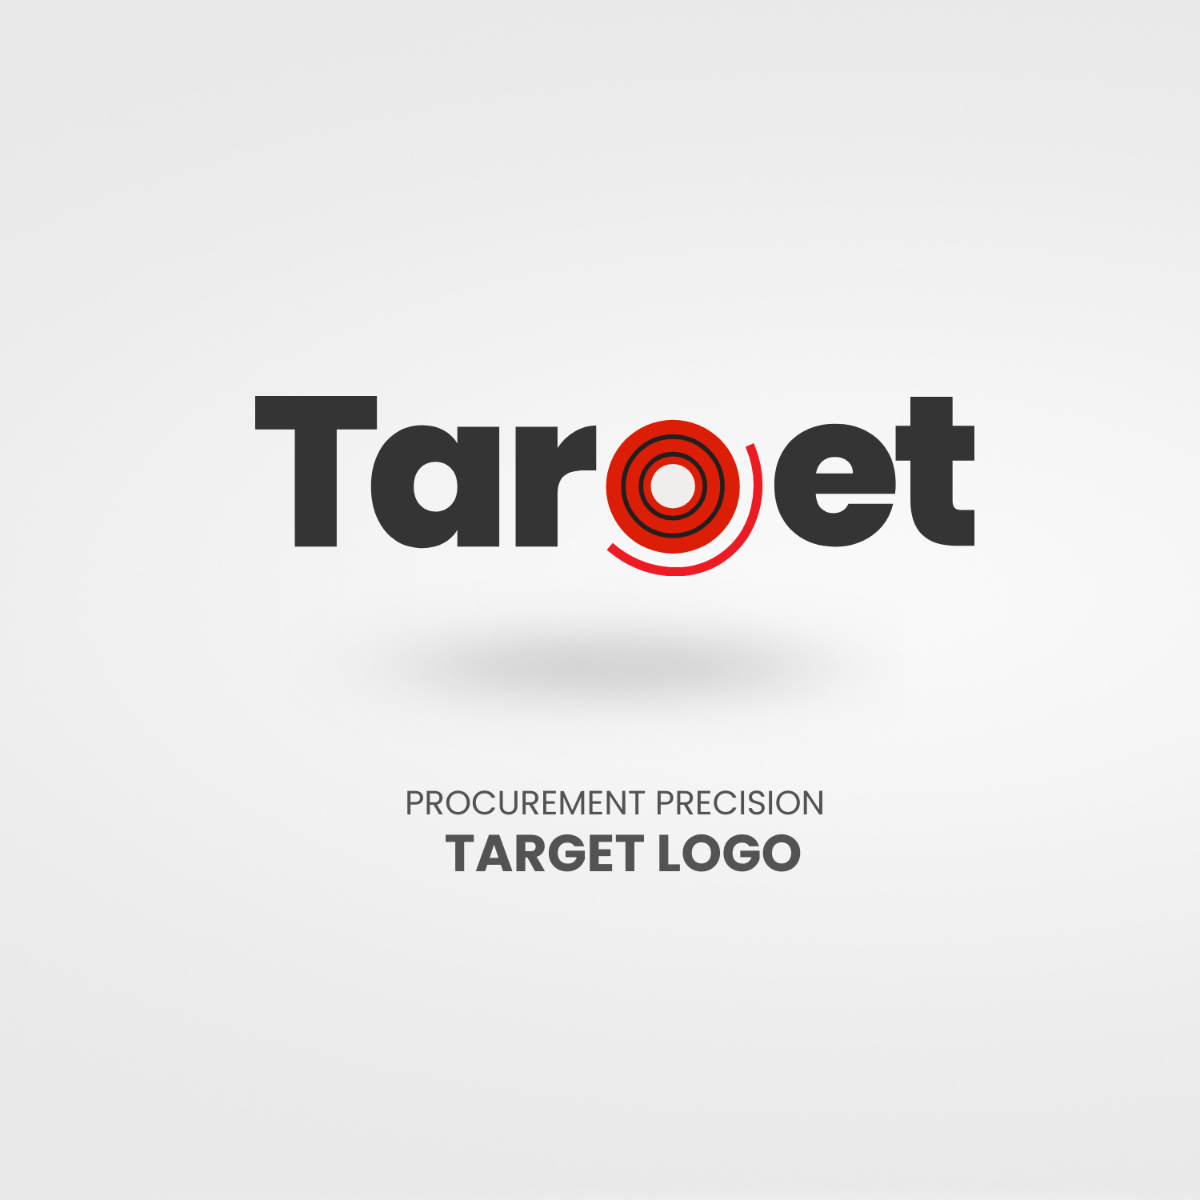 Procurement Precision Target Logo